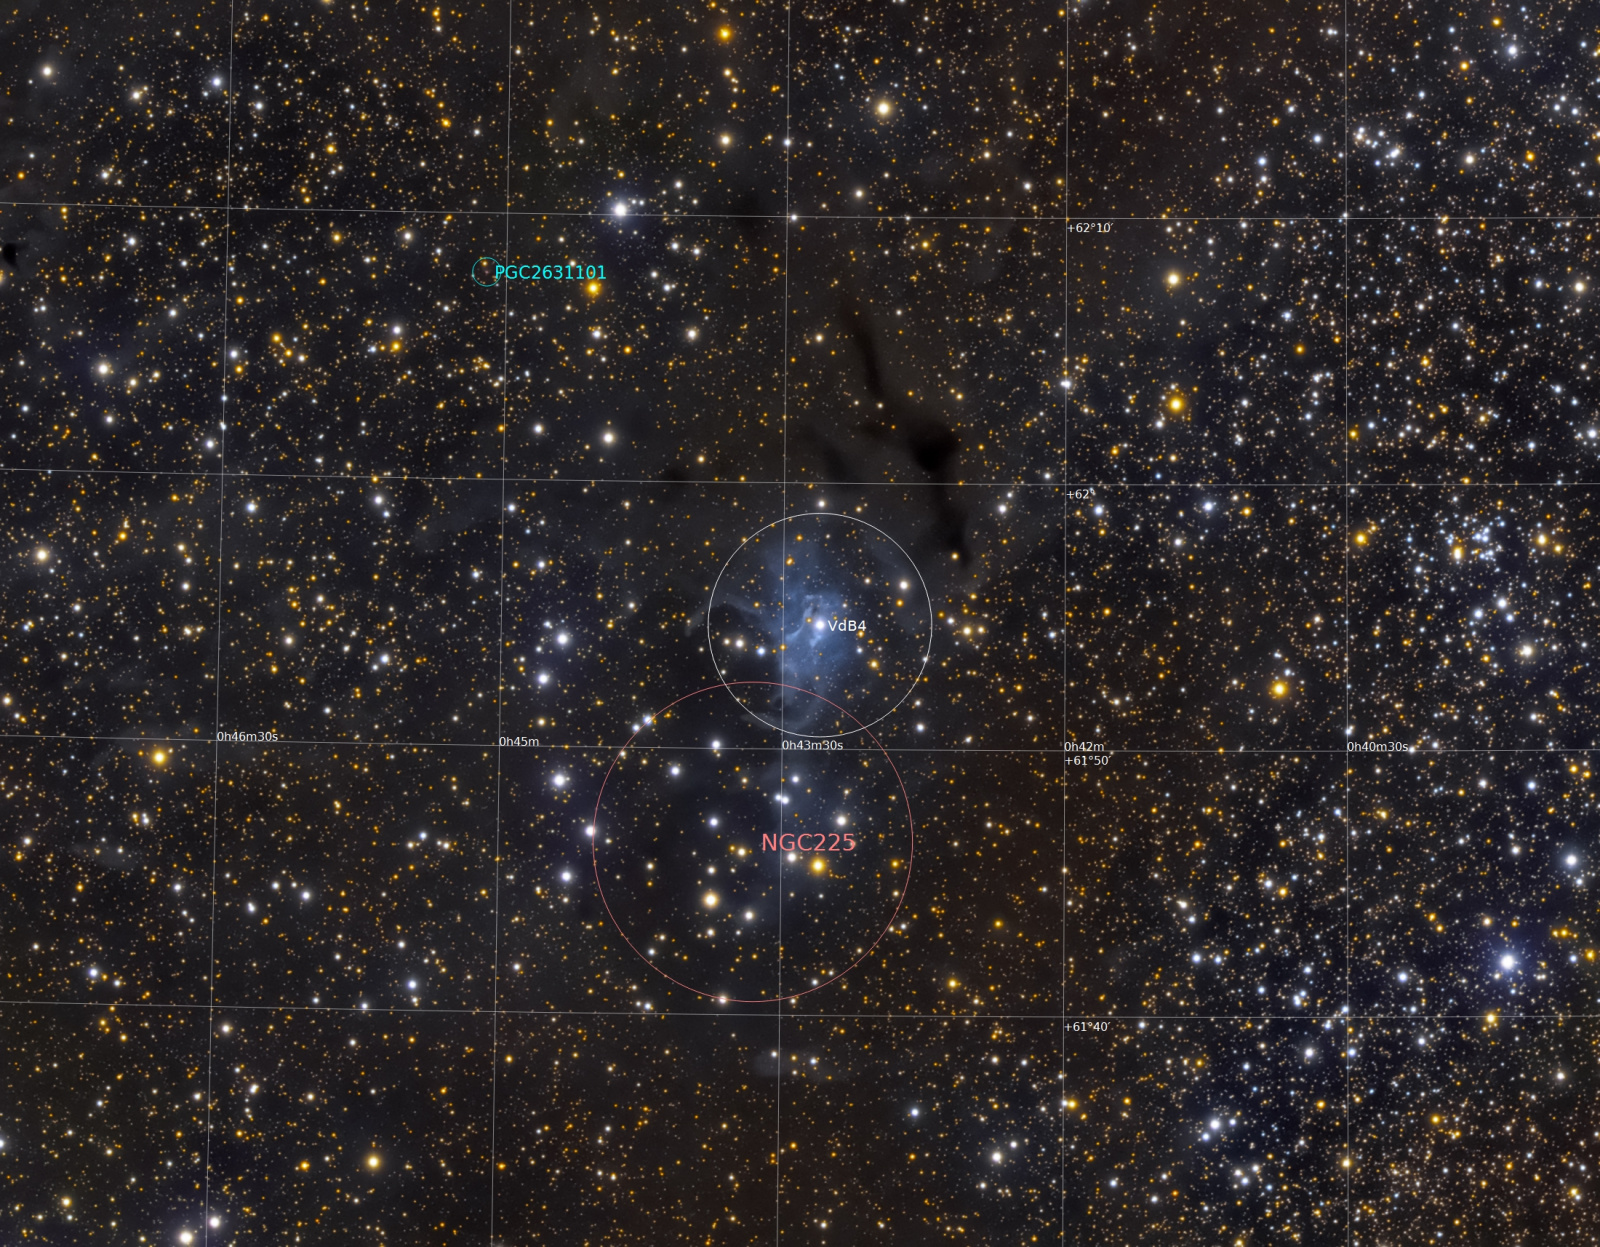 NGC_225_opis.jpg